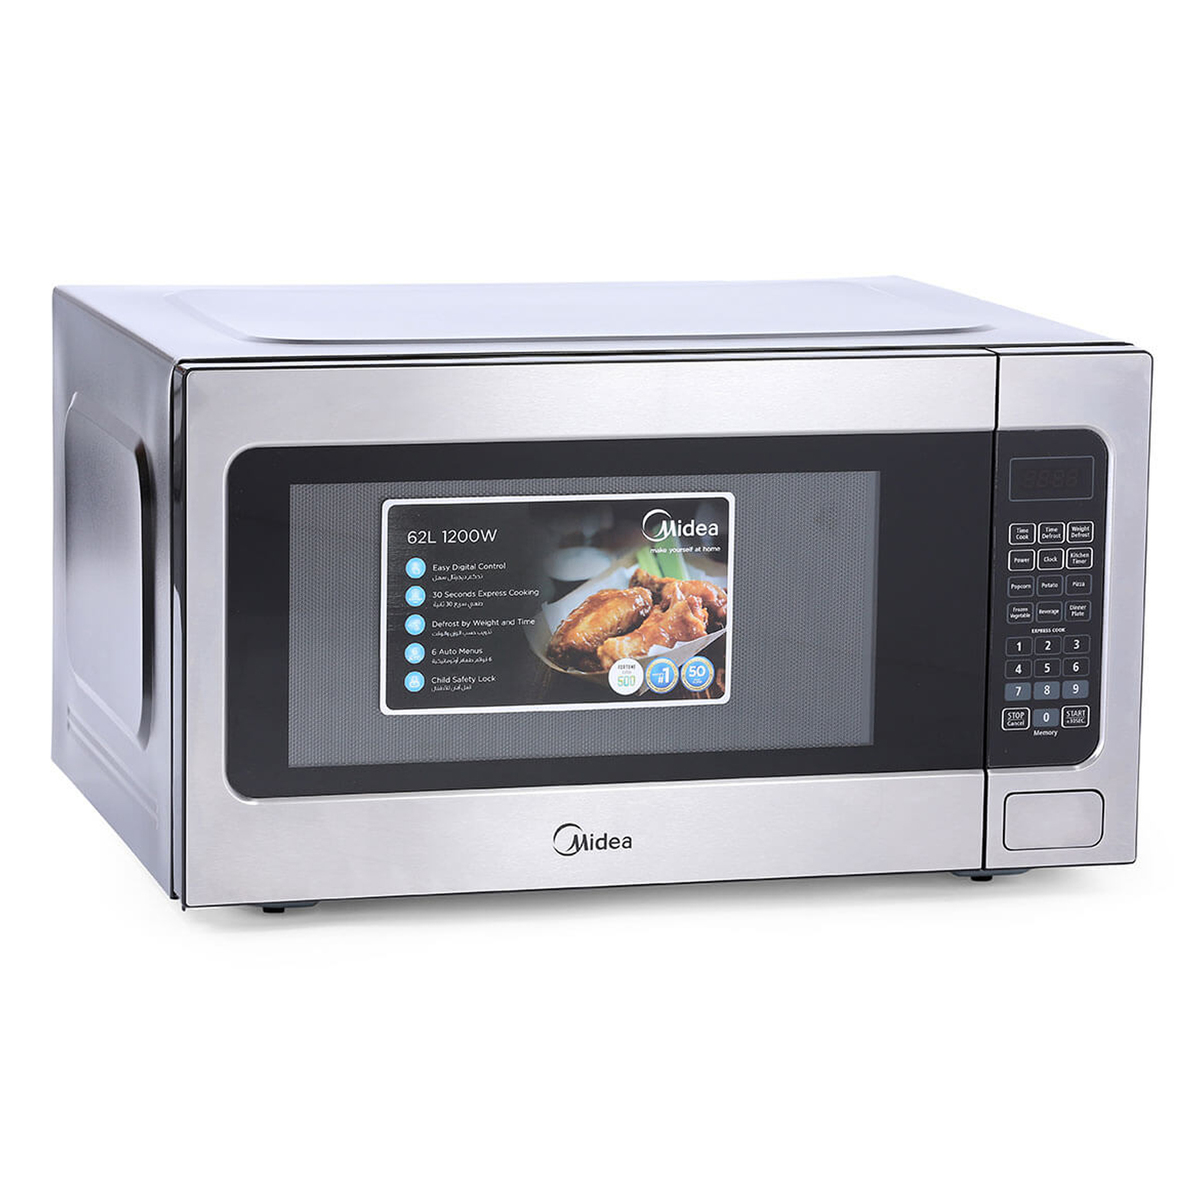 Midea Microwave Oven EM262AWY 62LTR